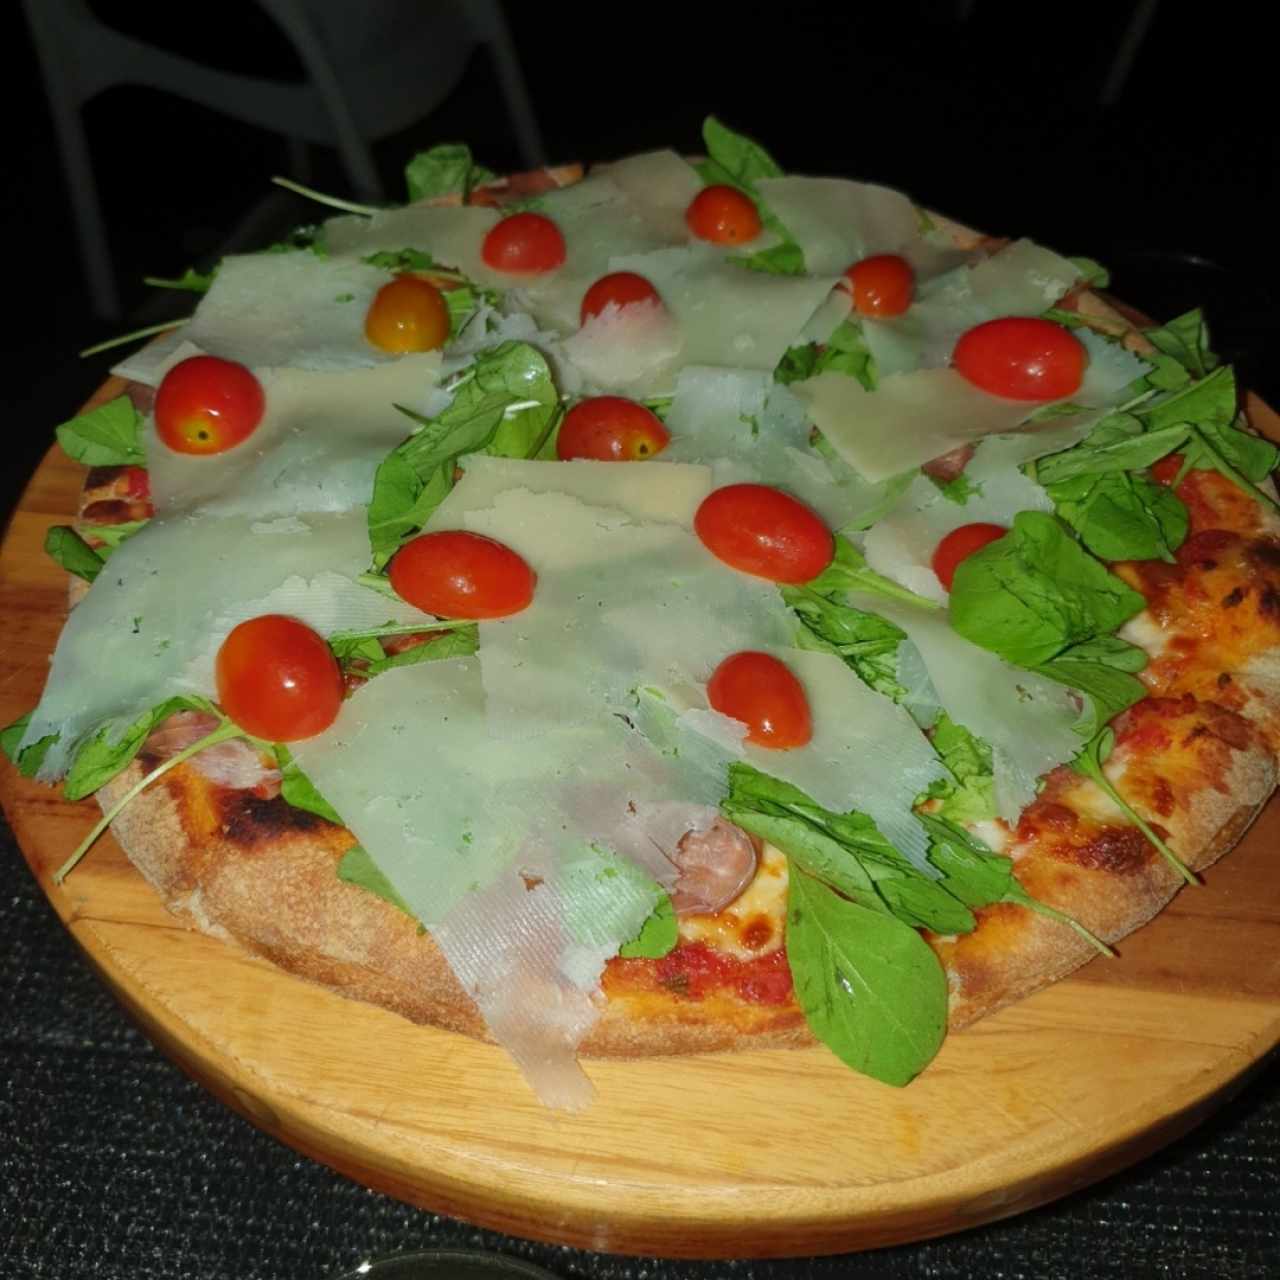 Pizza Rúcula